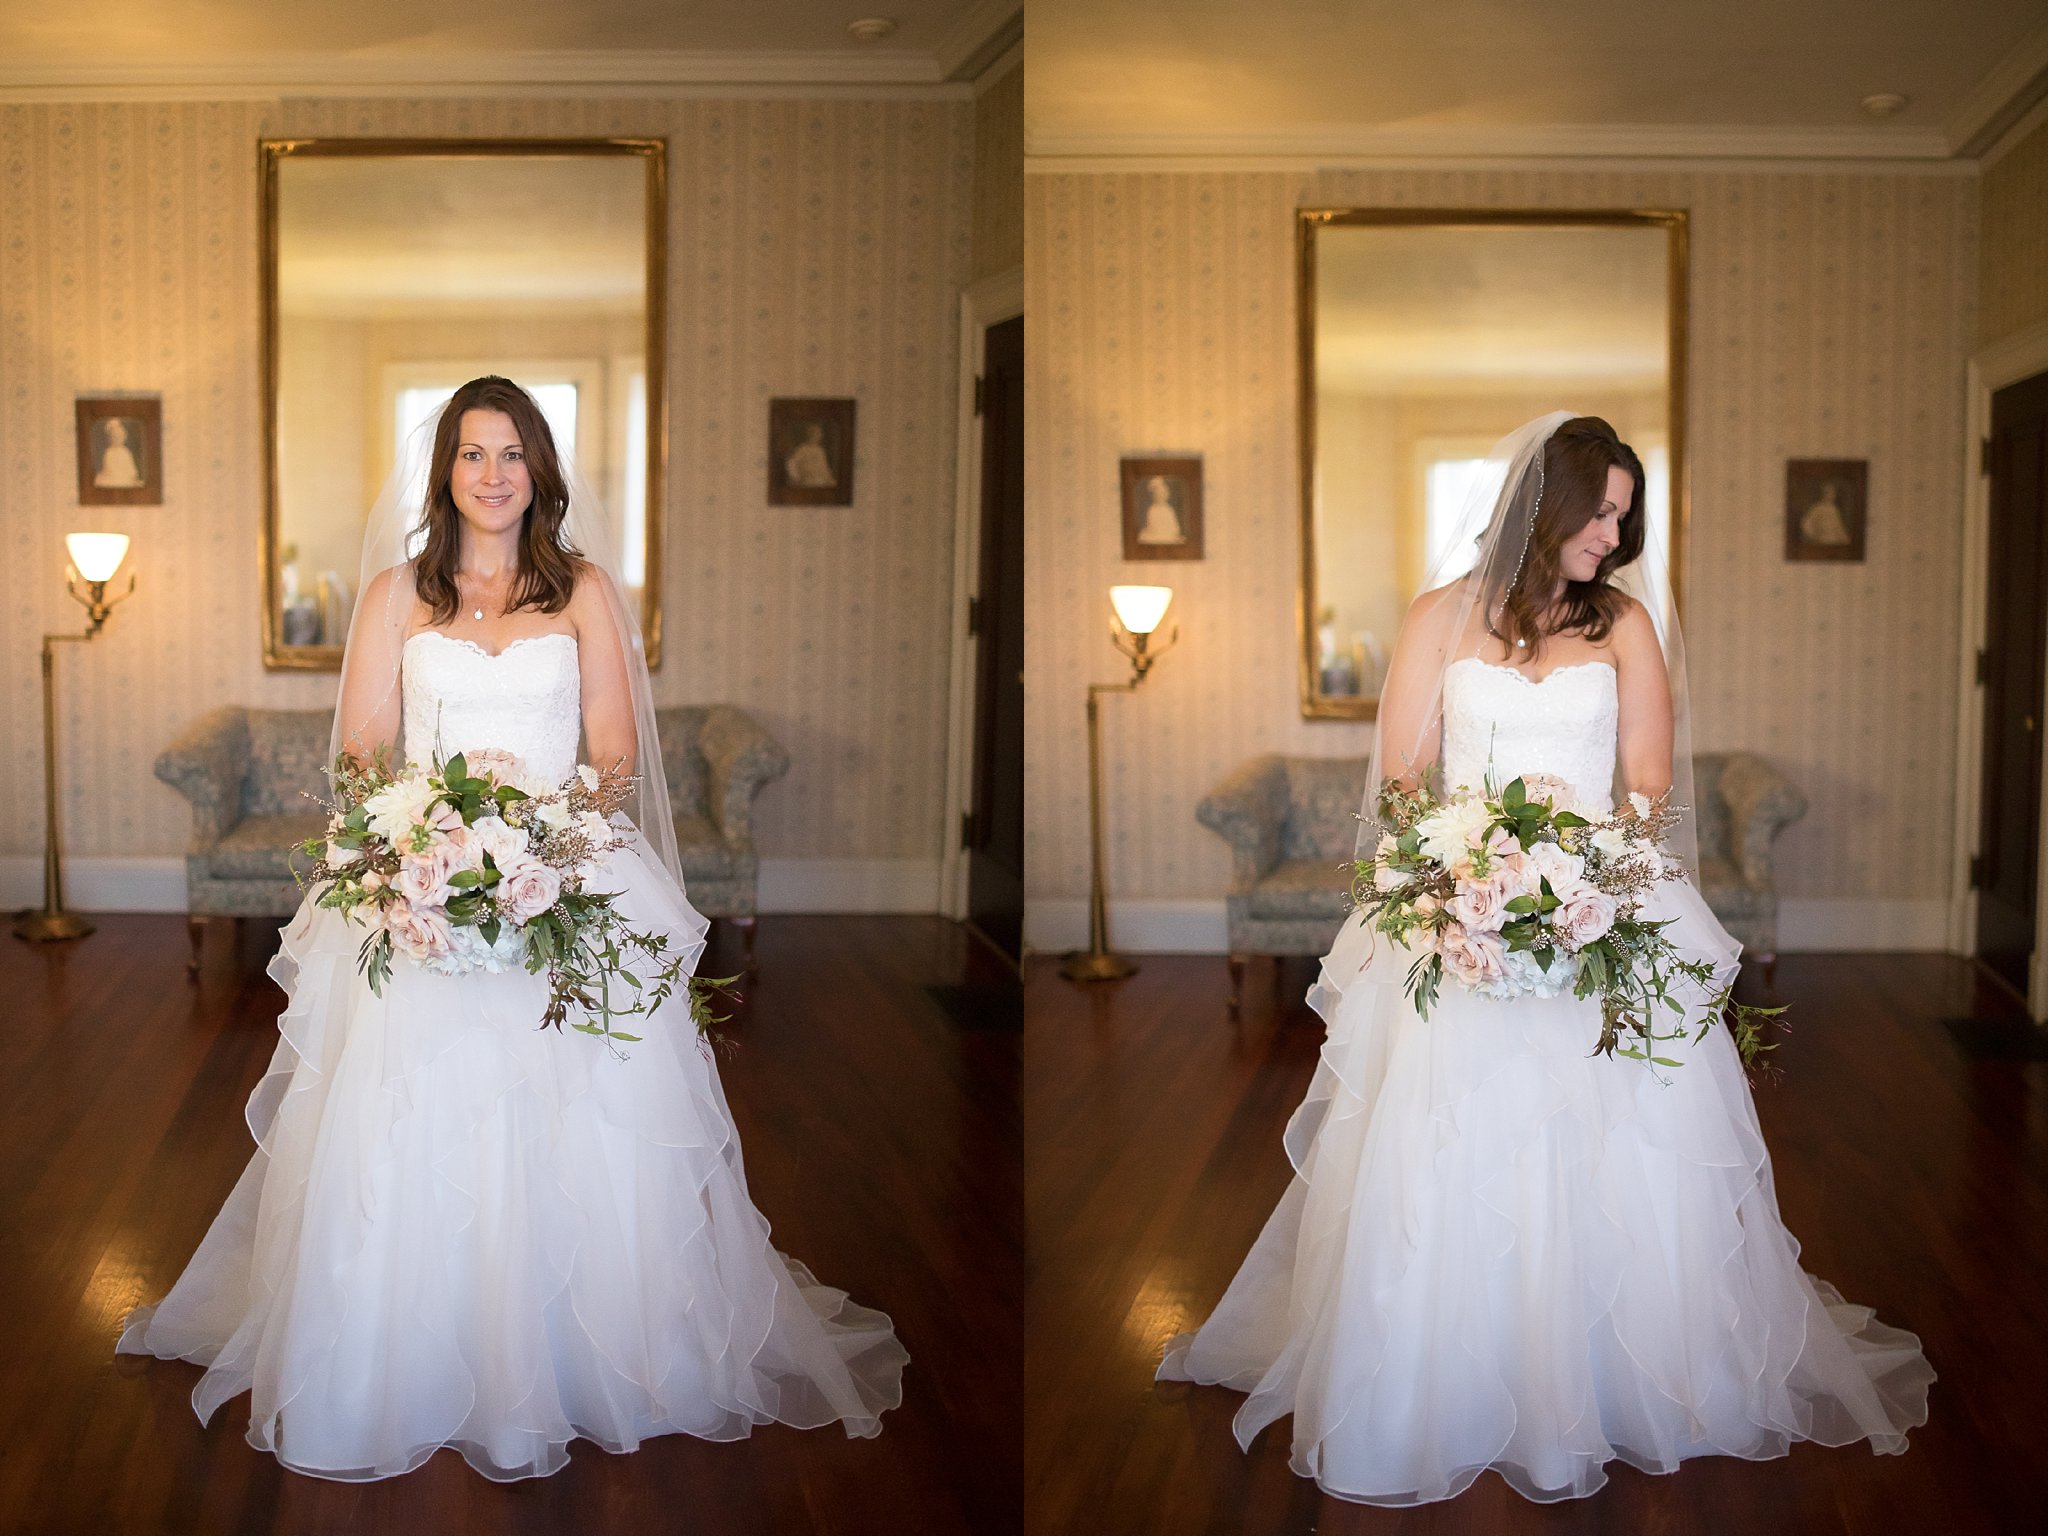 Wedding at Barker Mansion | Michigan City Indiana Photographer | Toni Jay Photography